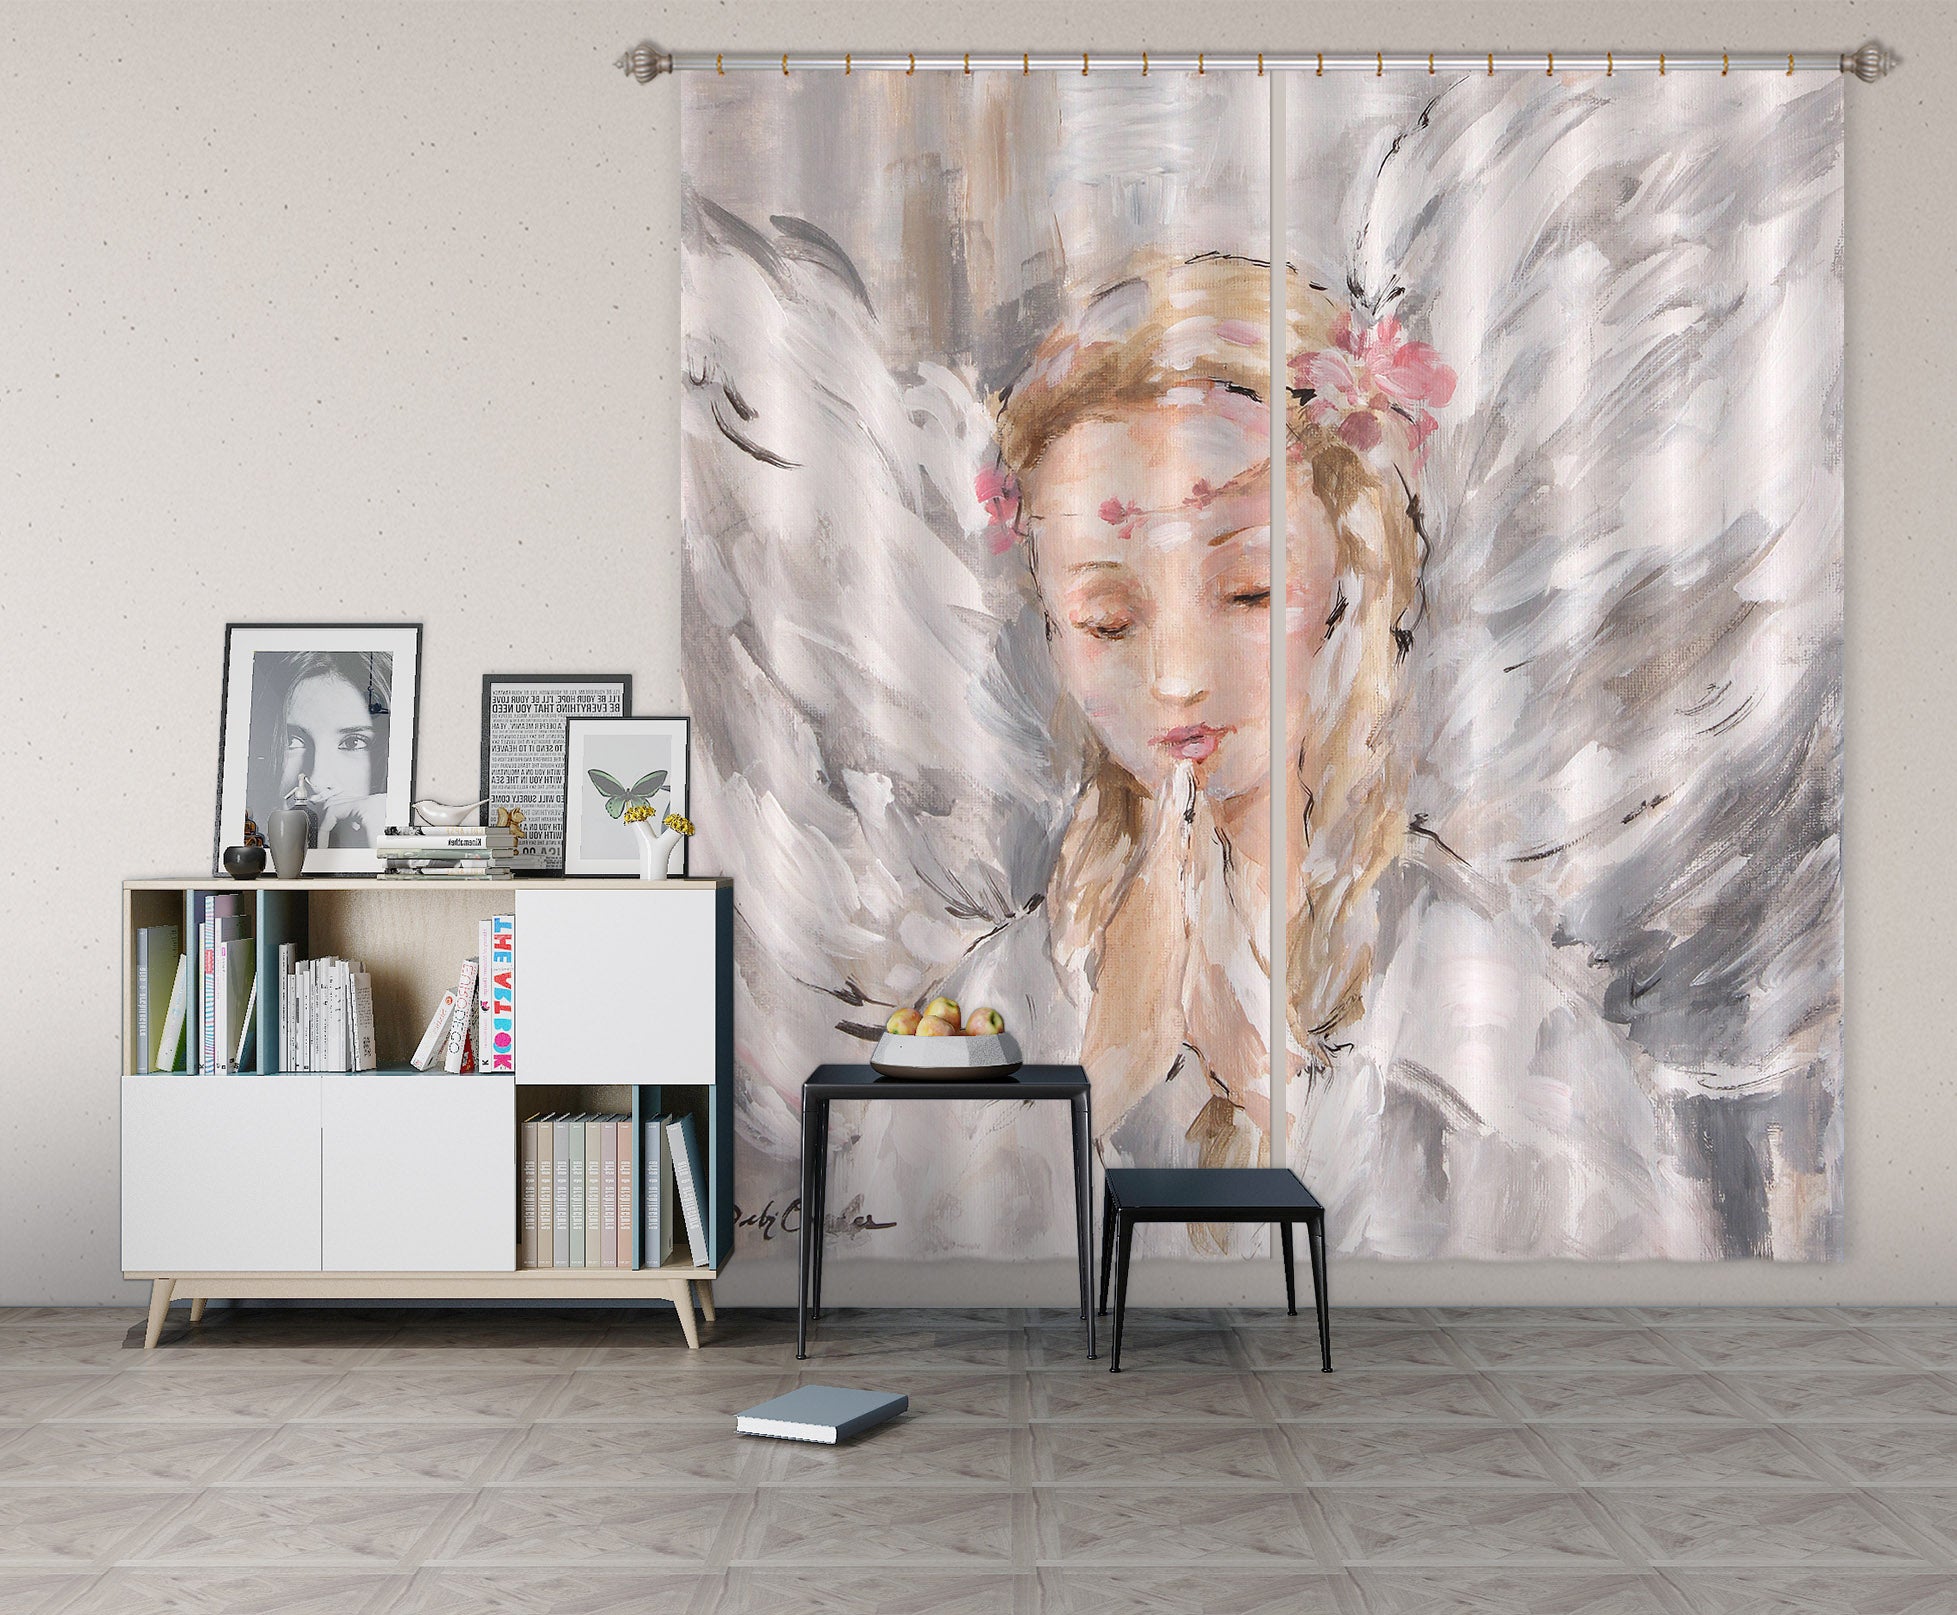 3D Wings Girl 2189 Debi Coules Curtain Curtains Drapes